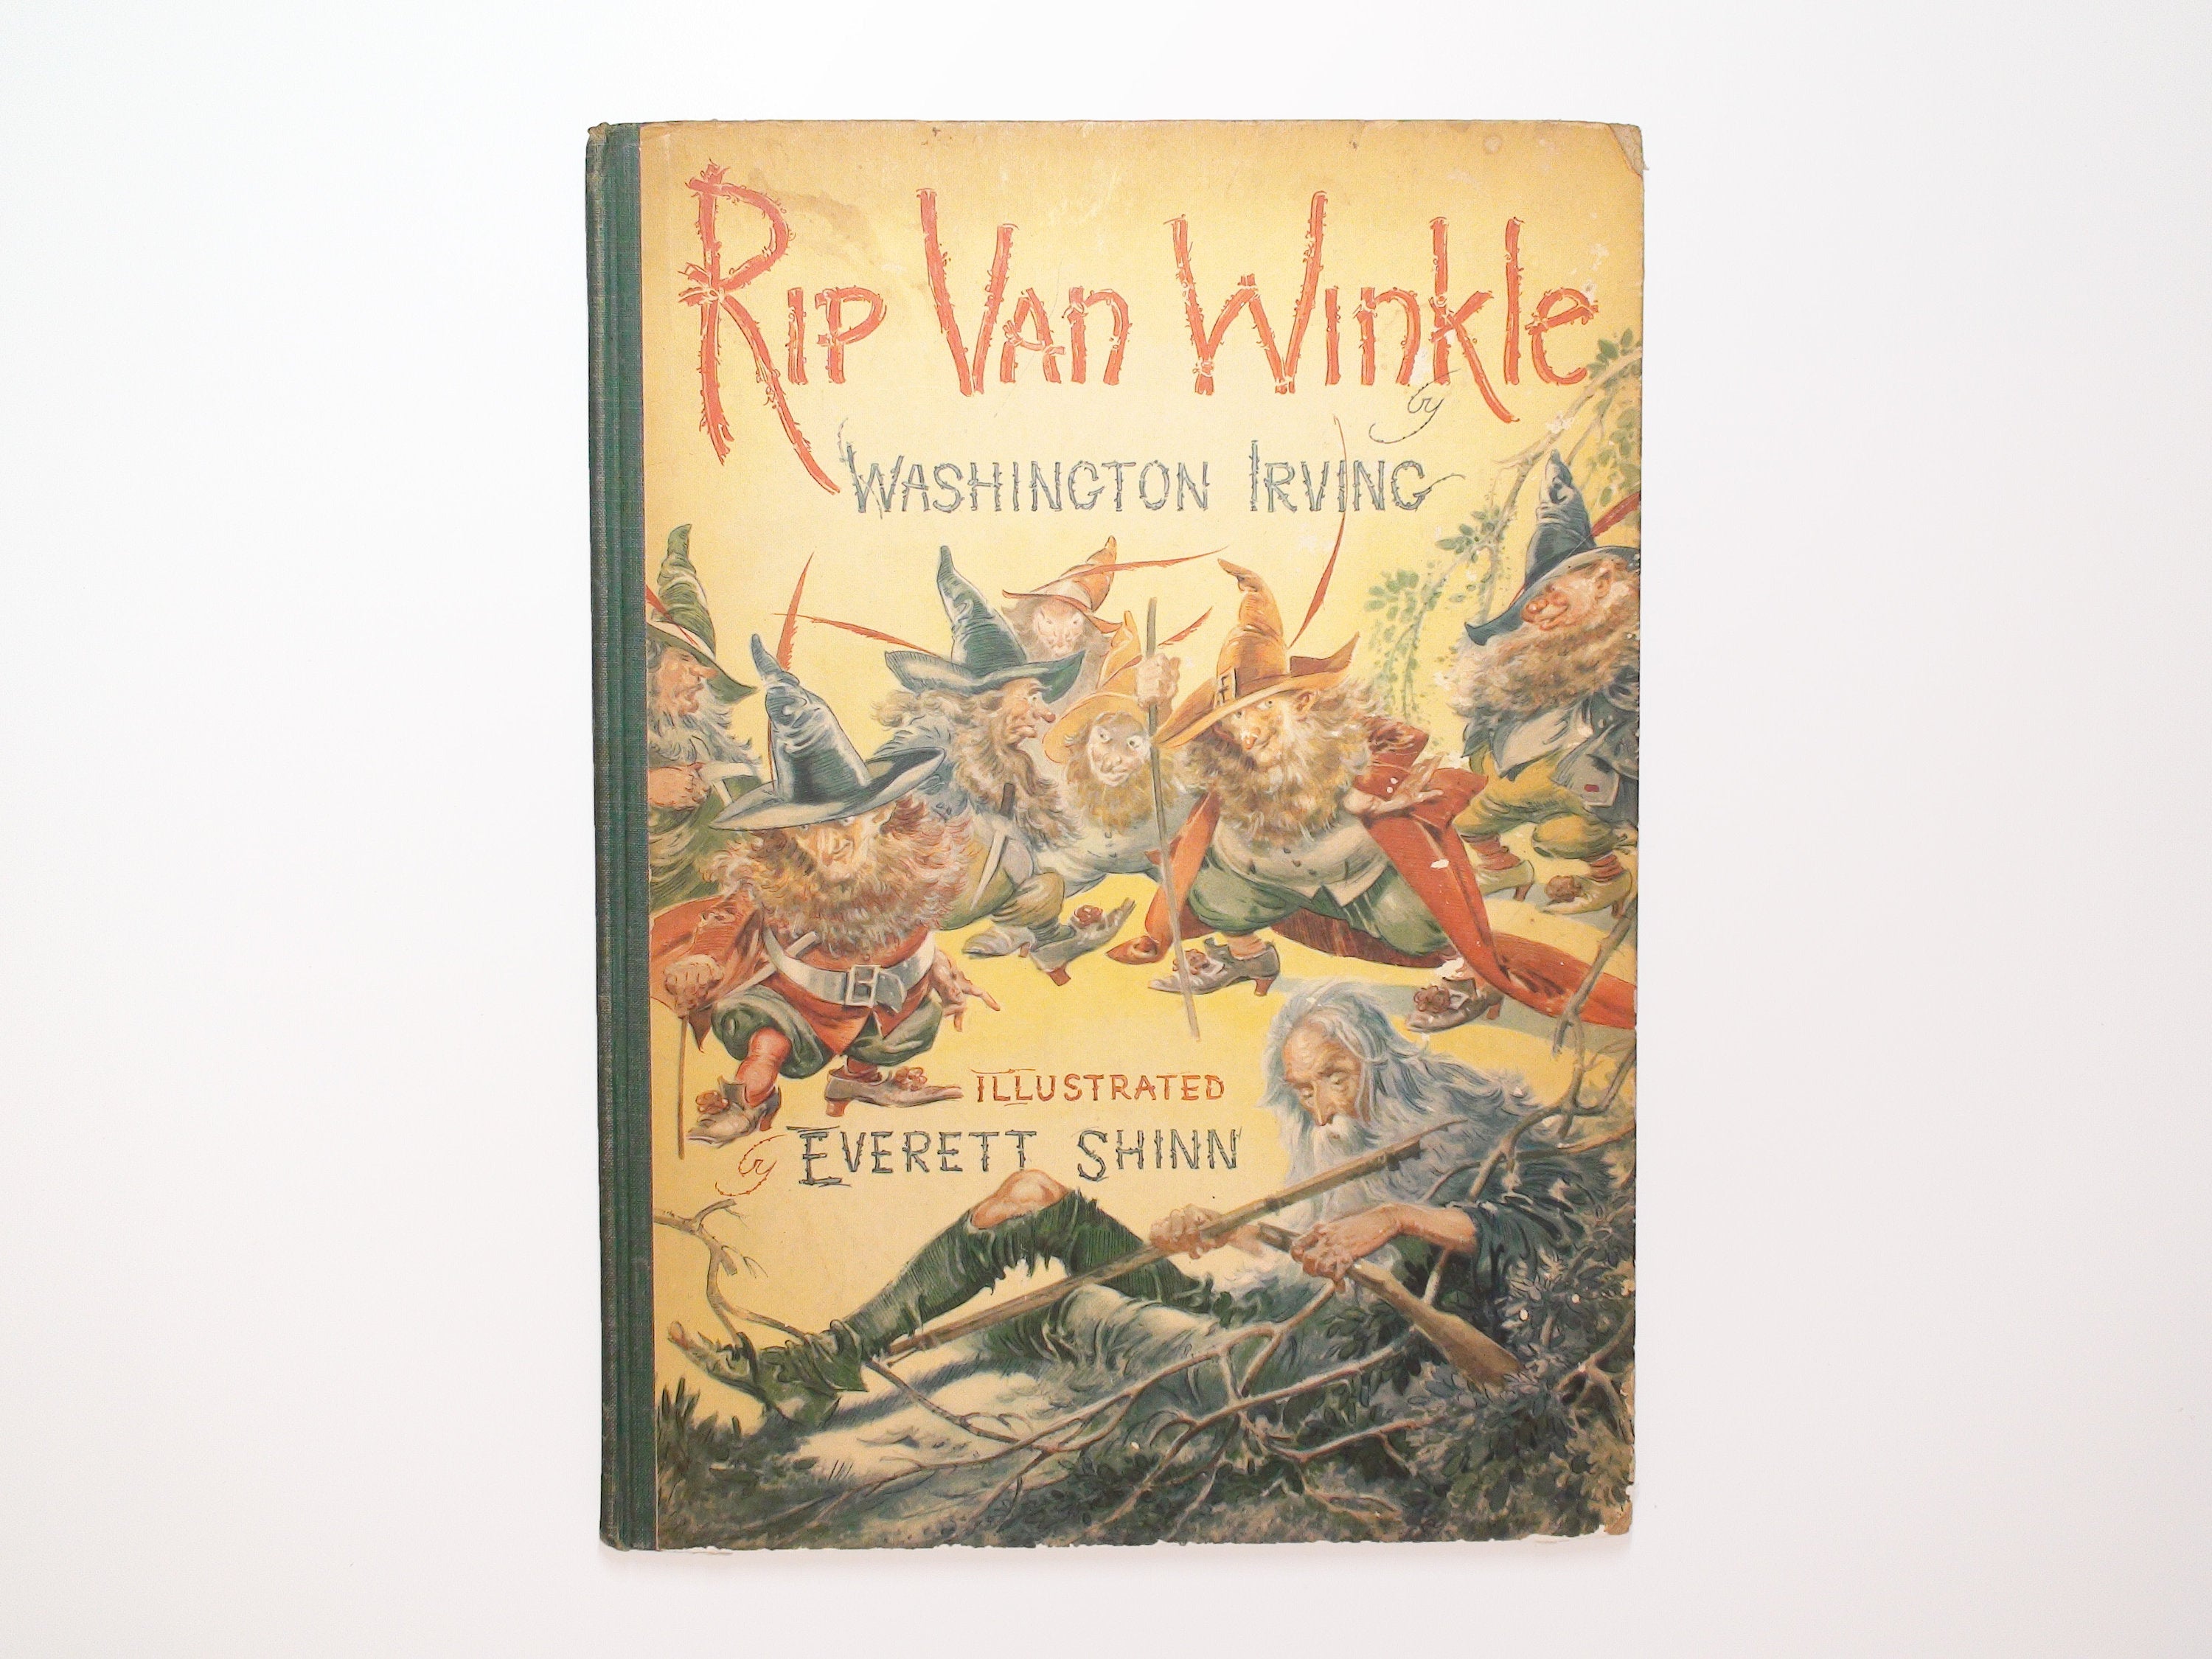 Rip Van Winkle by Washington Irving, Illustrated by Everett Shinn, 1939